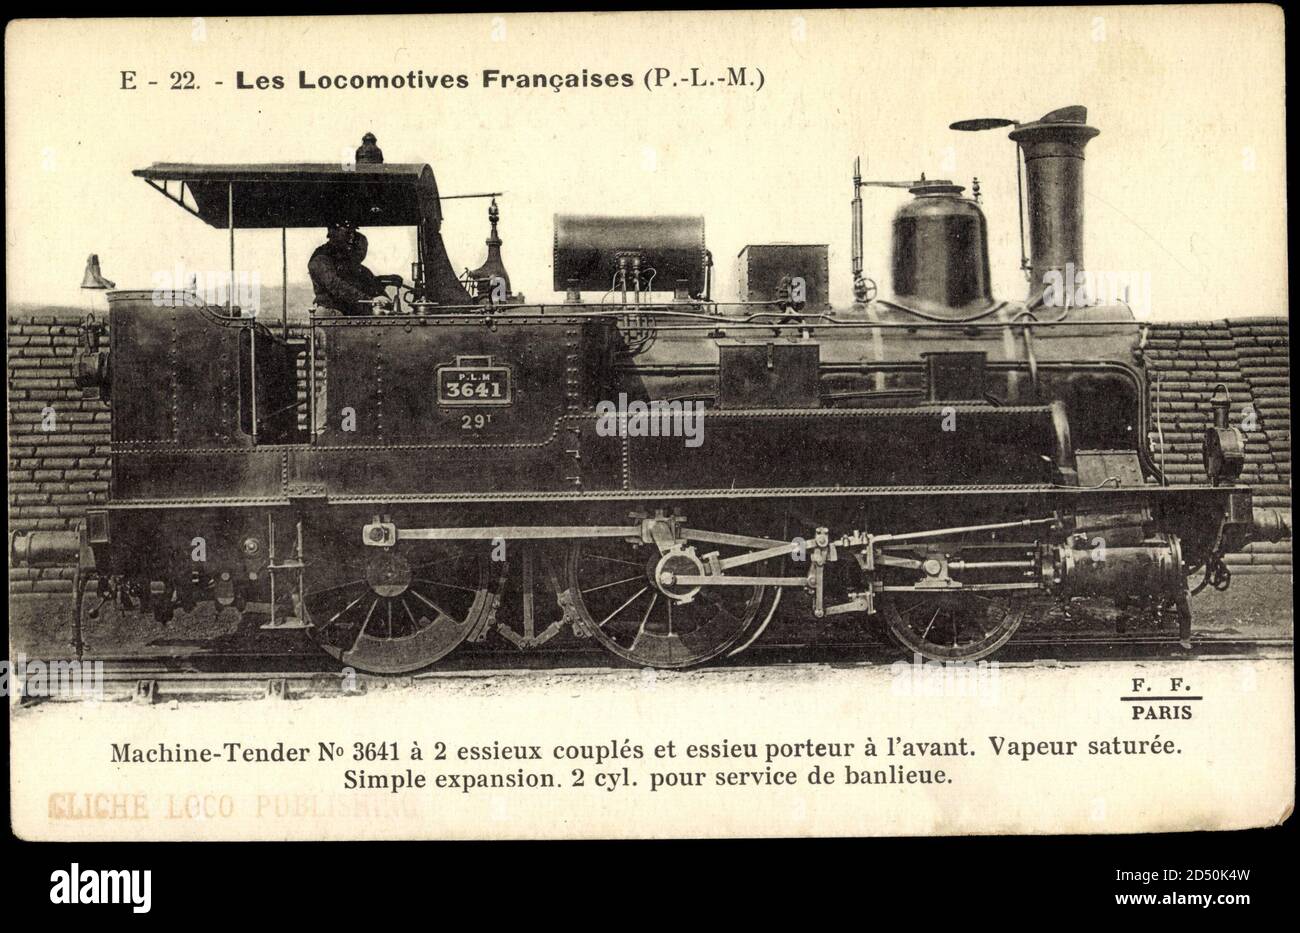 Locomotives Francaises, P.L.M,Machine Tender No 3641 | usage worldwide Stock Photo